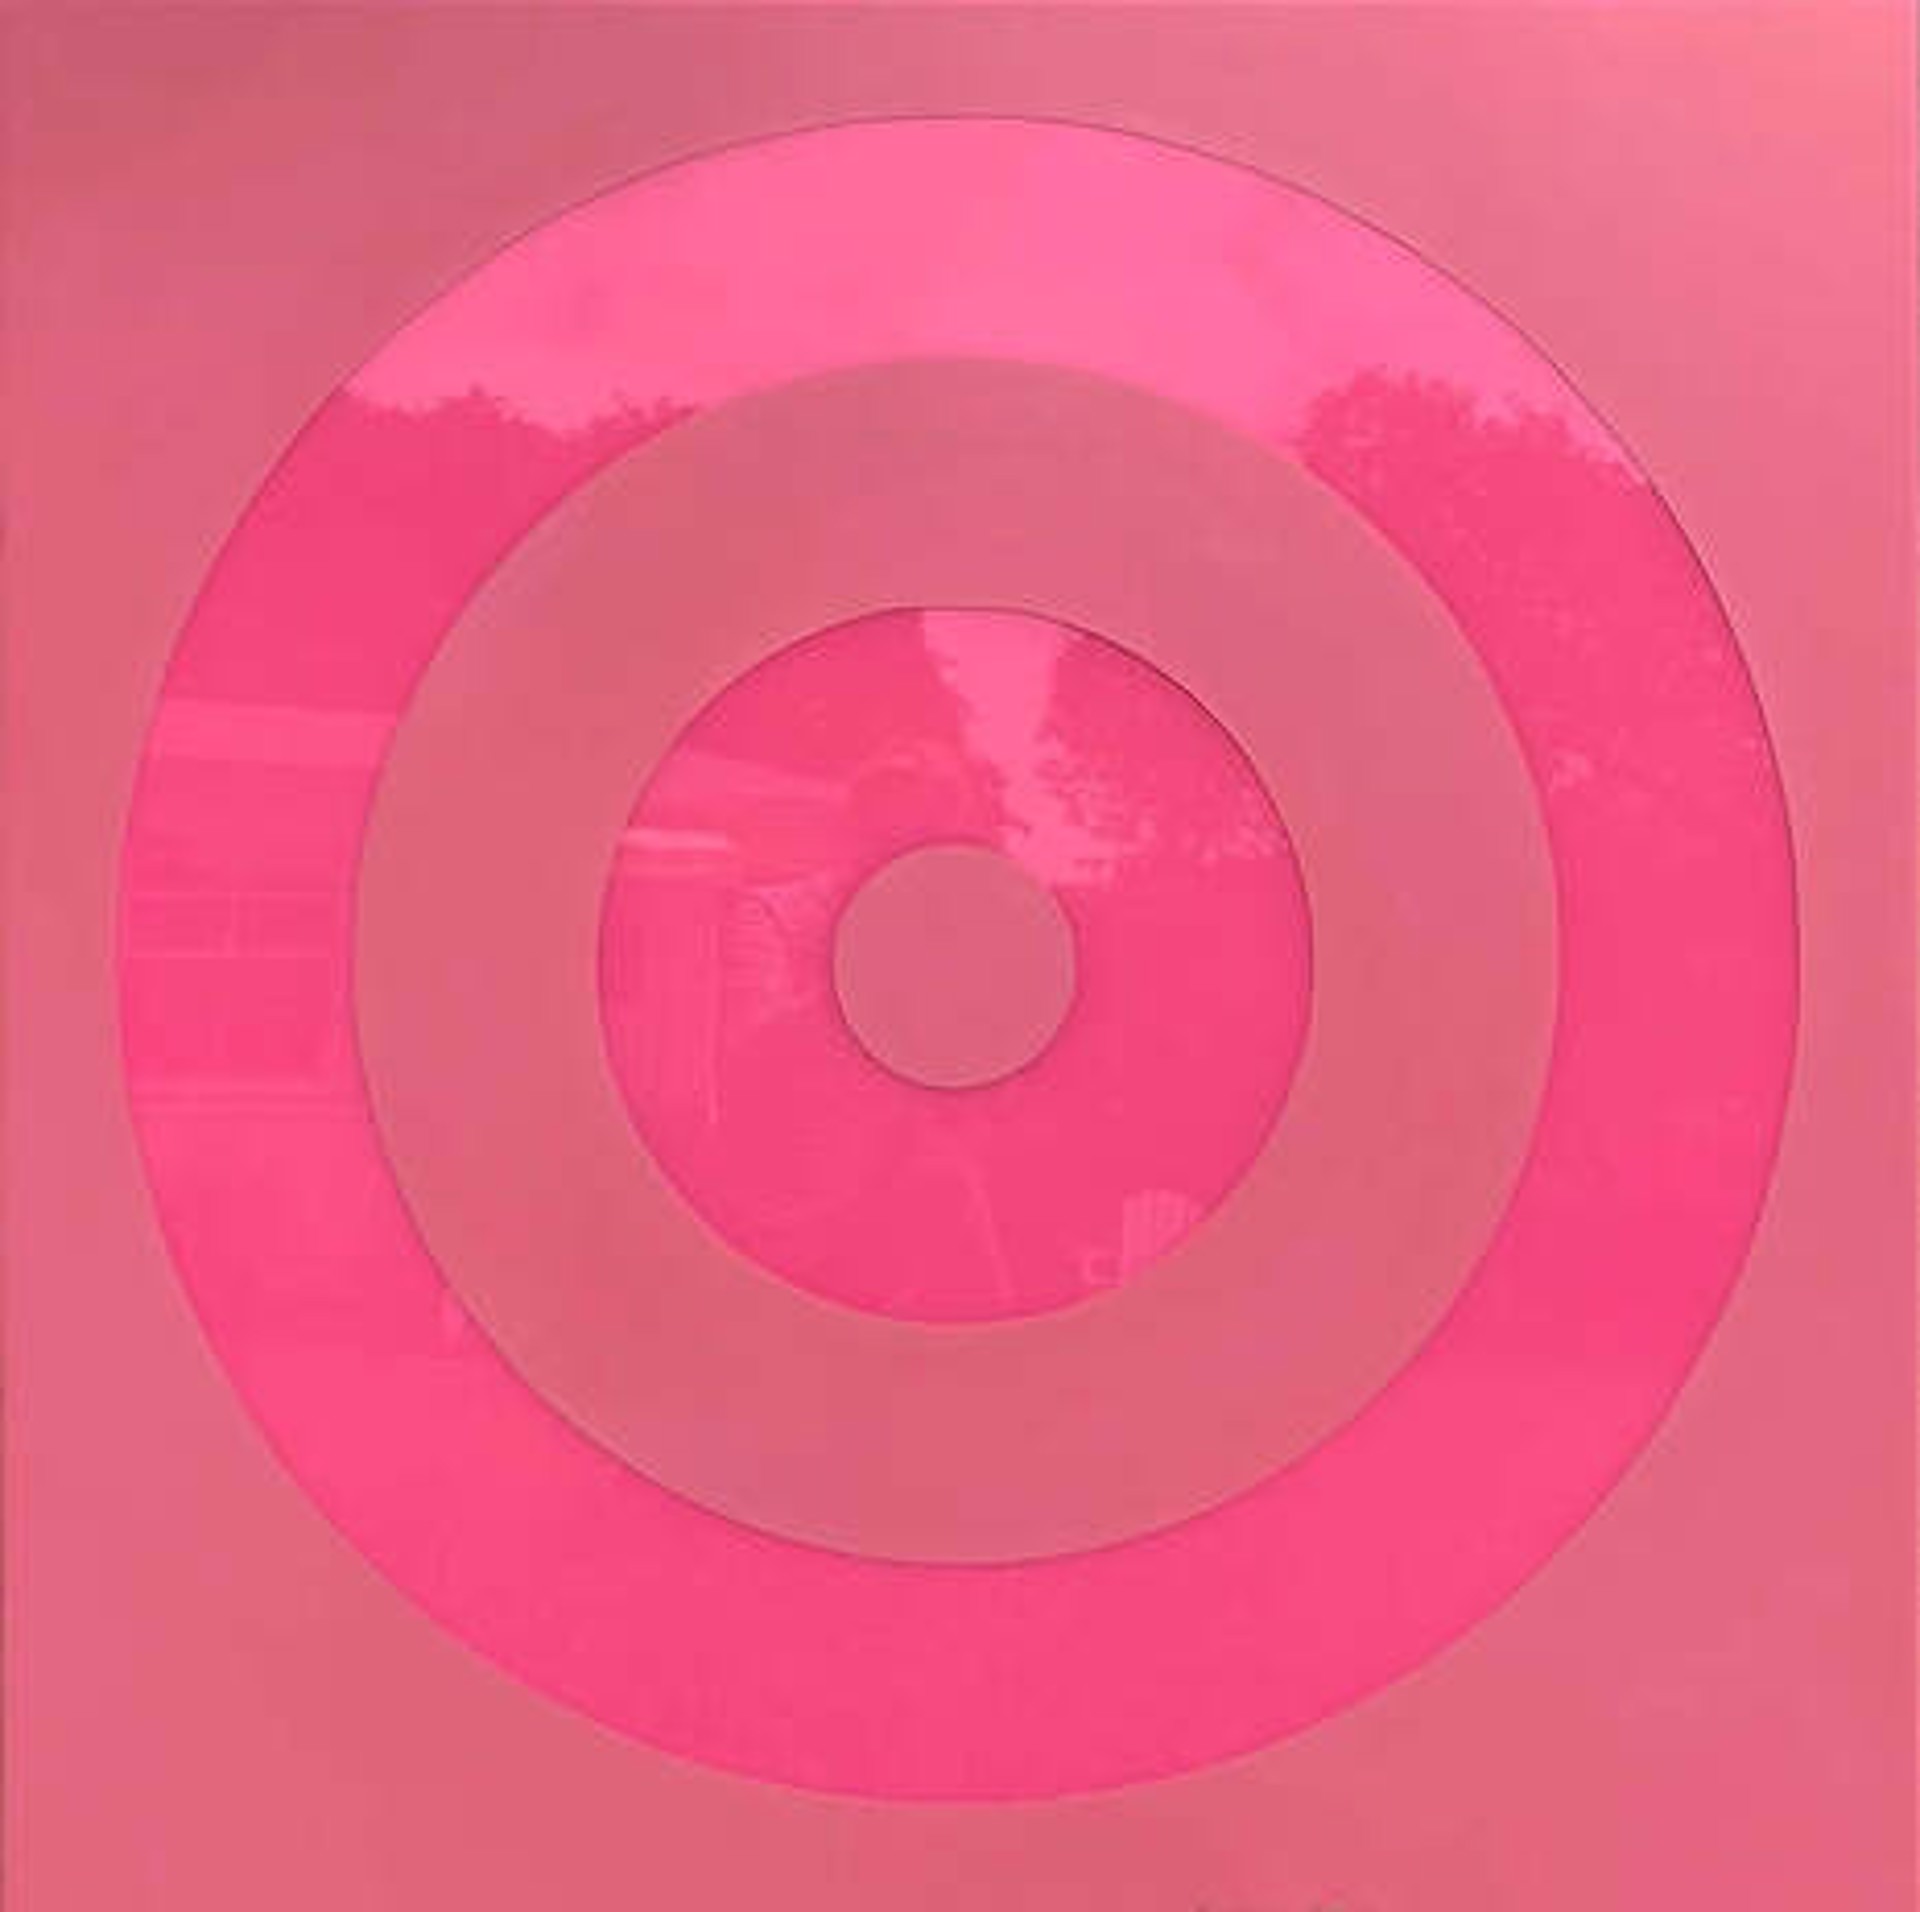 Target Practice Hot + Dusky by Stephanie Henderson